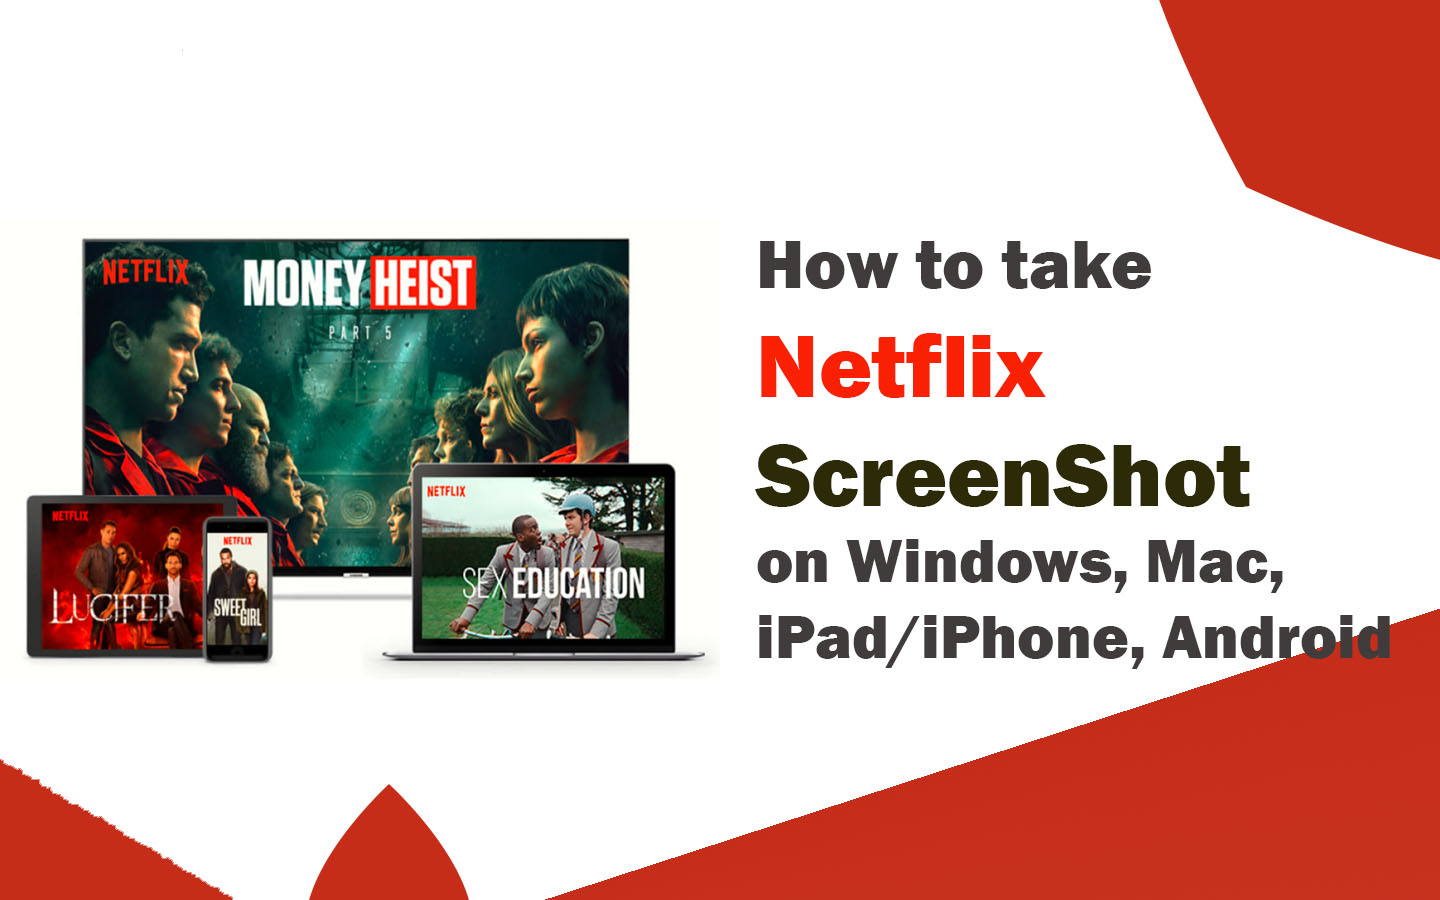 How to take Netflix ScreenShot on Windows, Mac, iPad/iPhone, Android